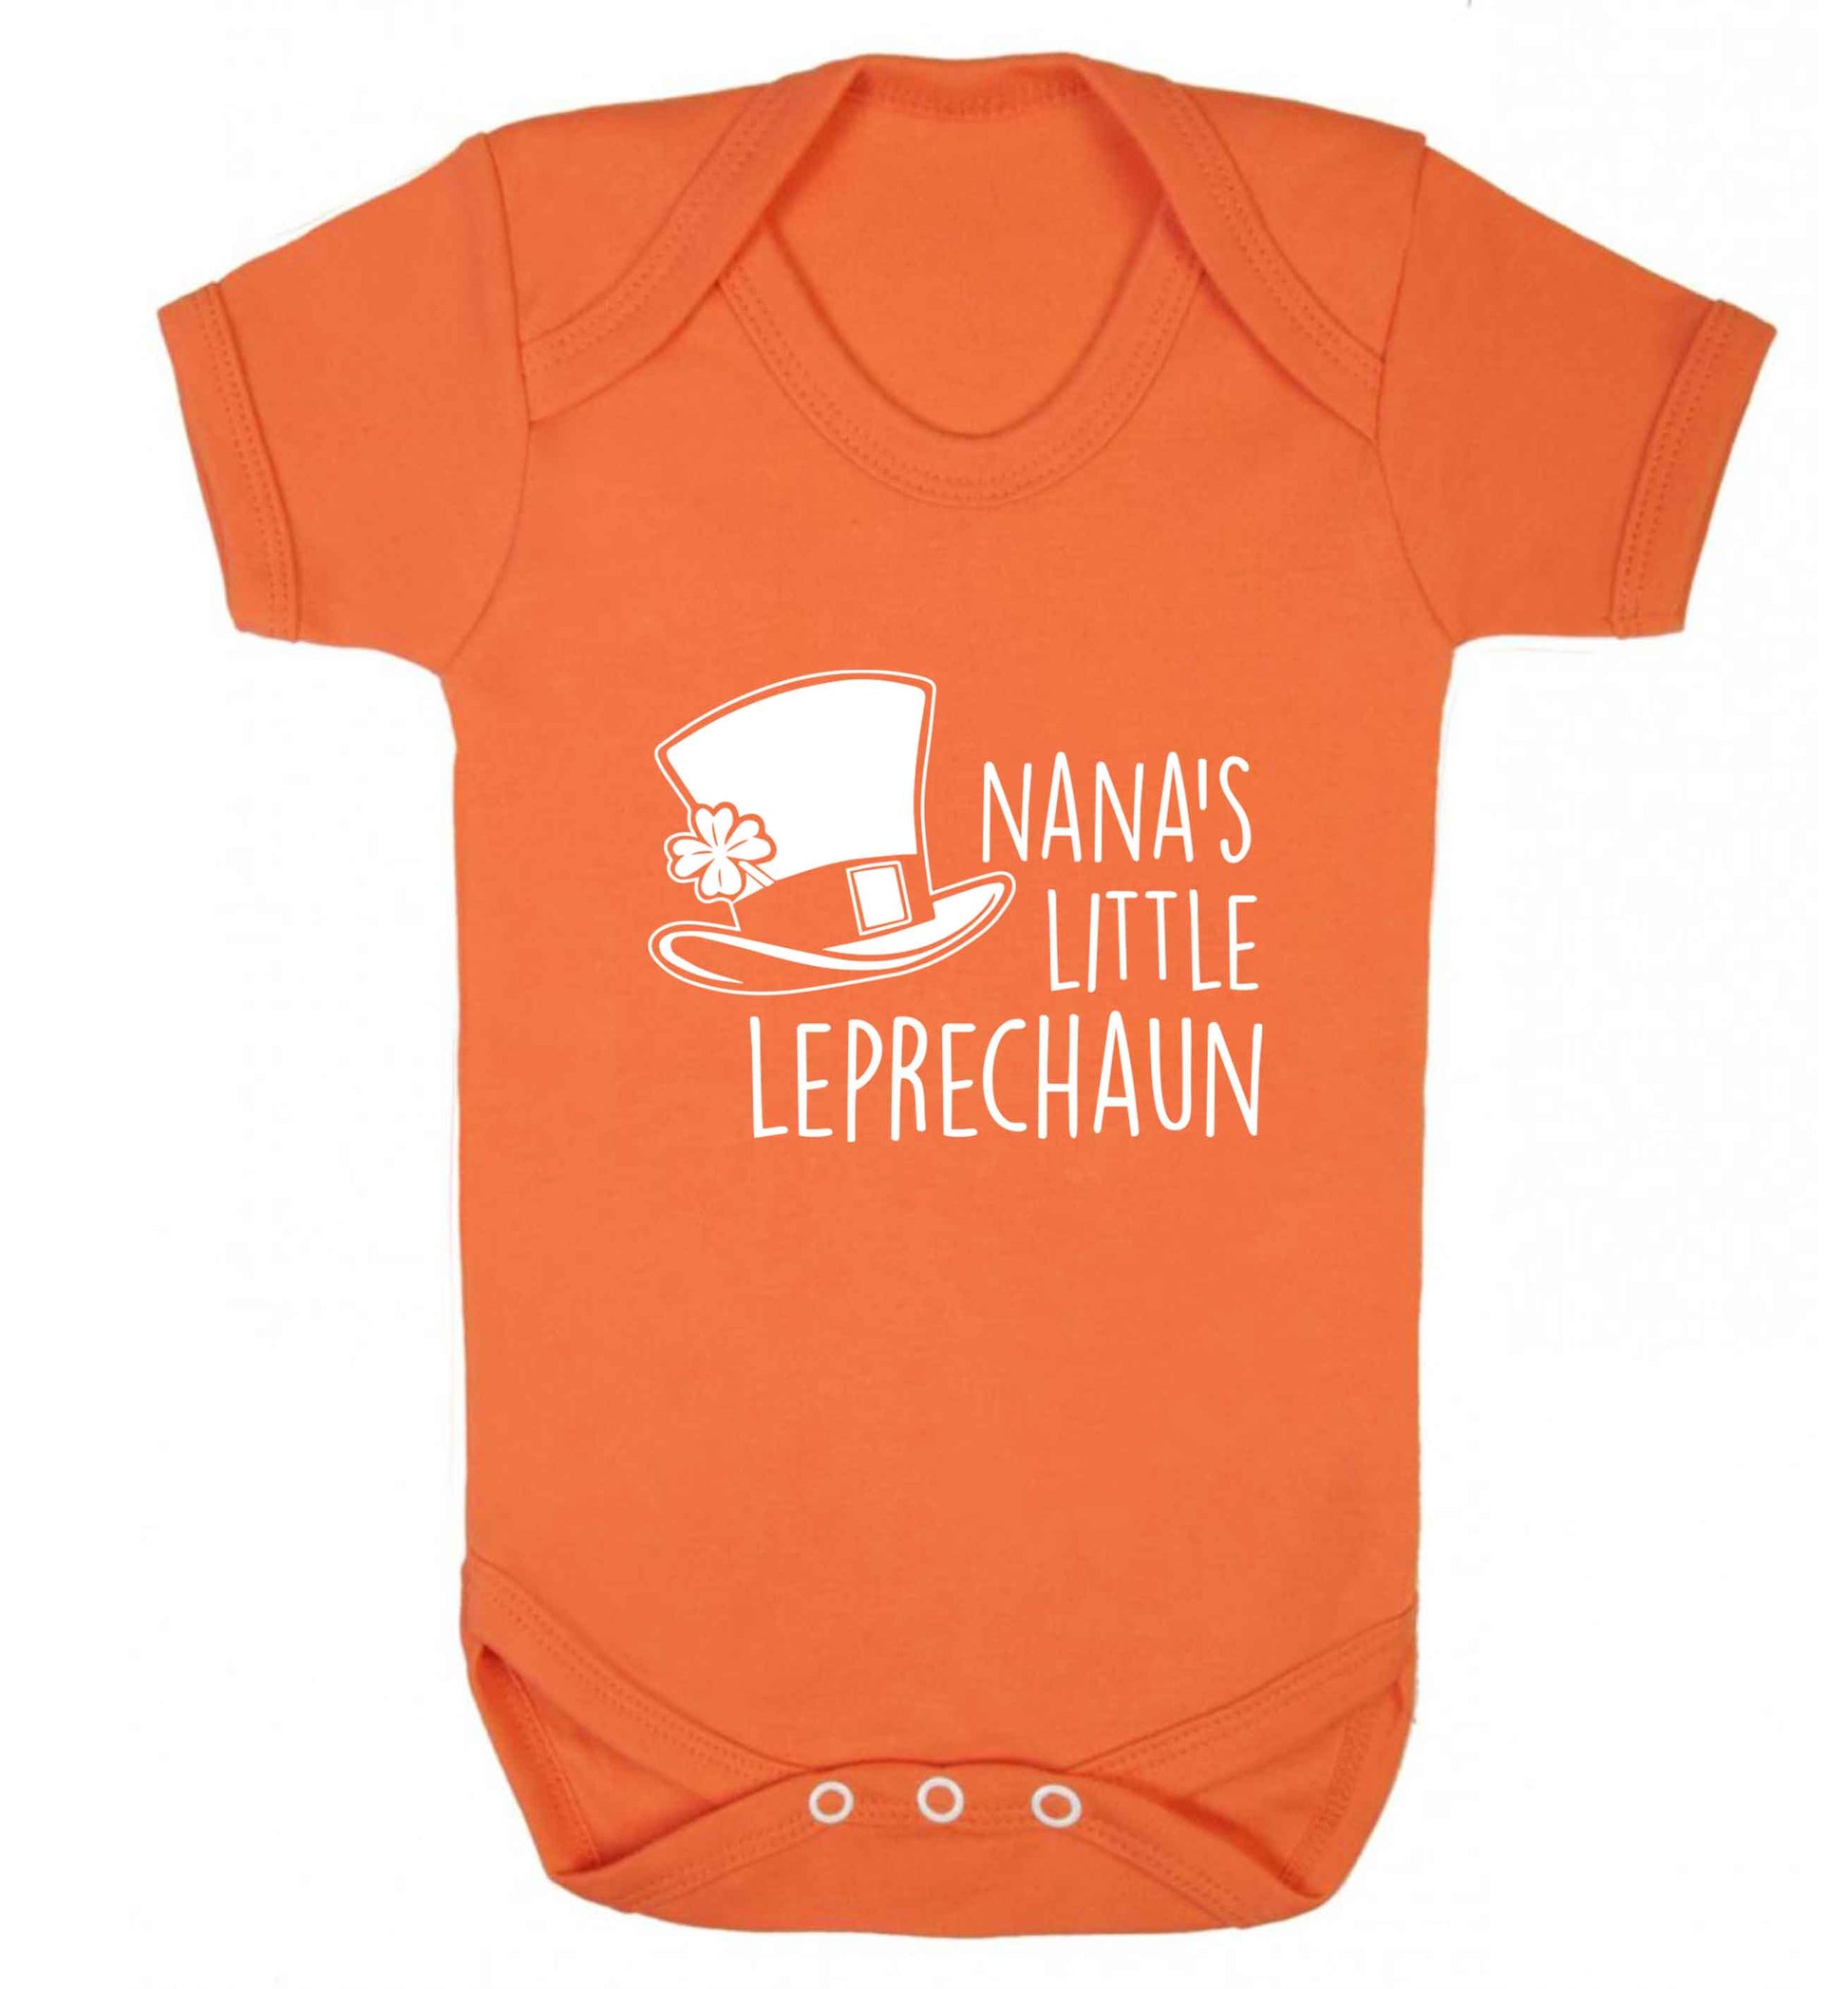 Nana's little leprechaun baby vest orange 18-24 months